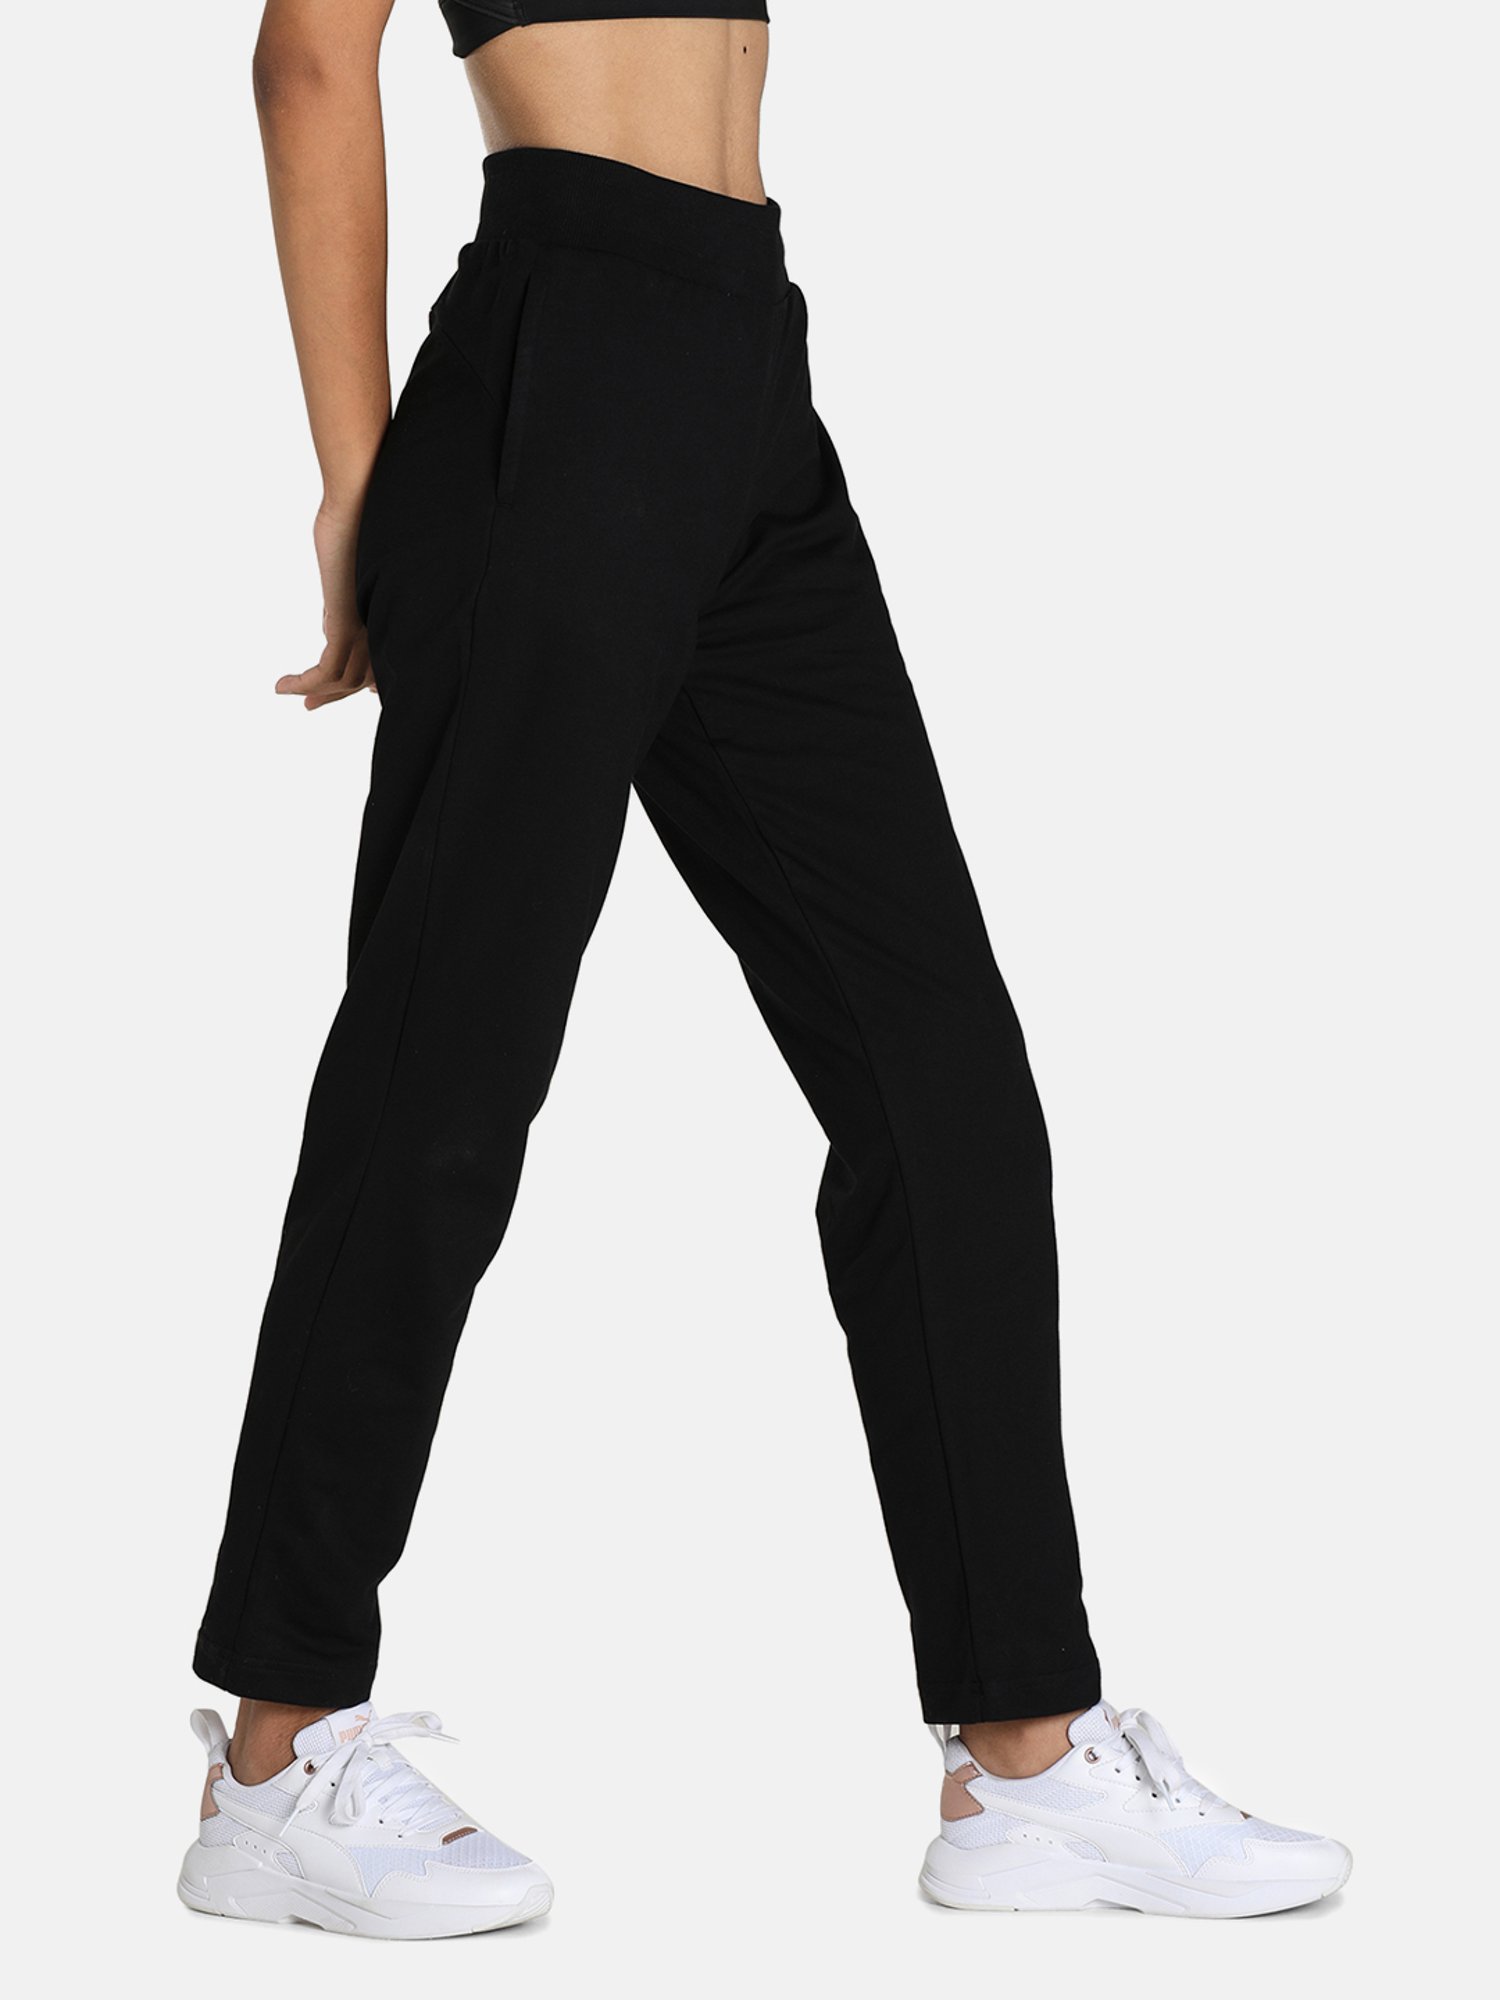 Buy Puma Black Cotton Trackpants for Women's Online @ Tata CLiQ